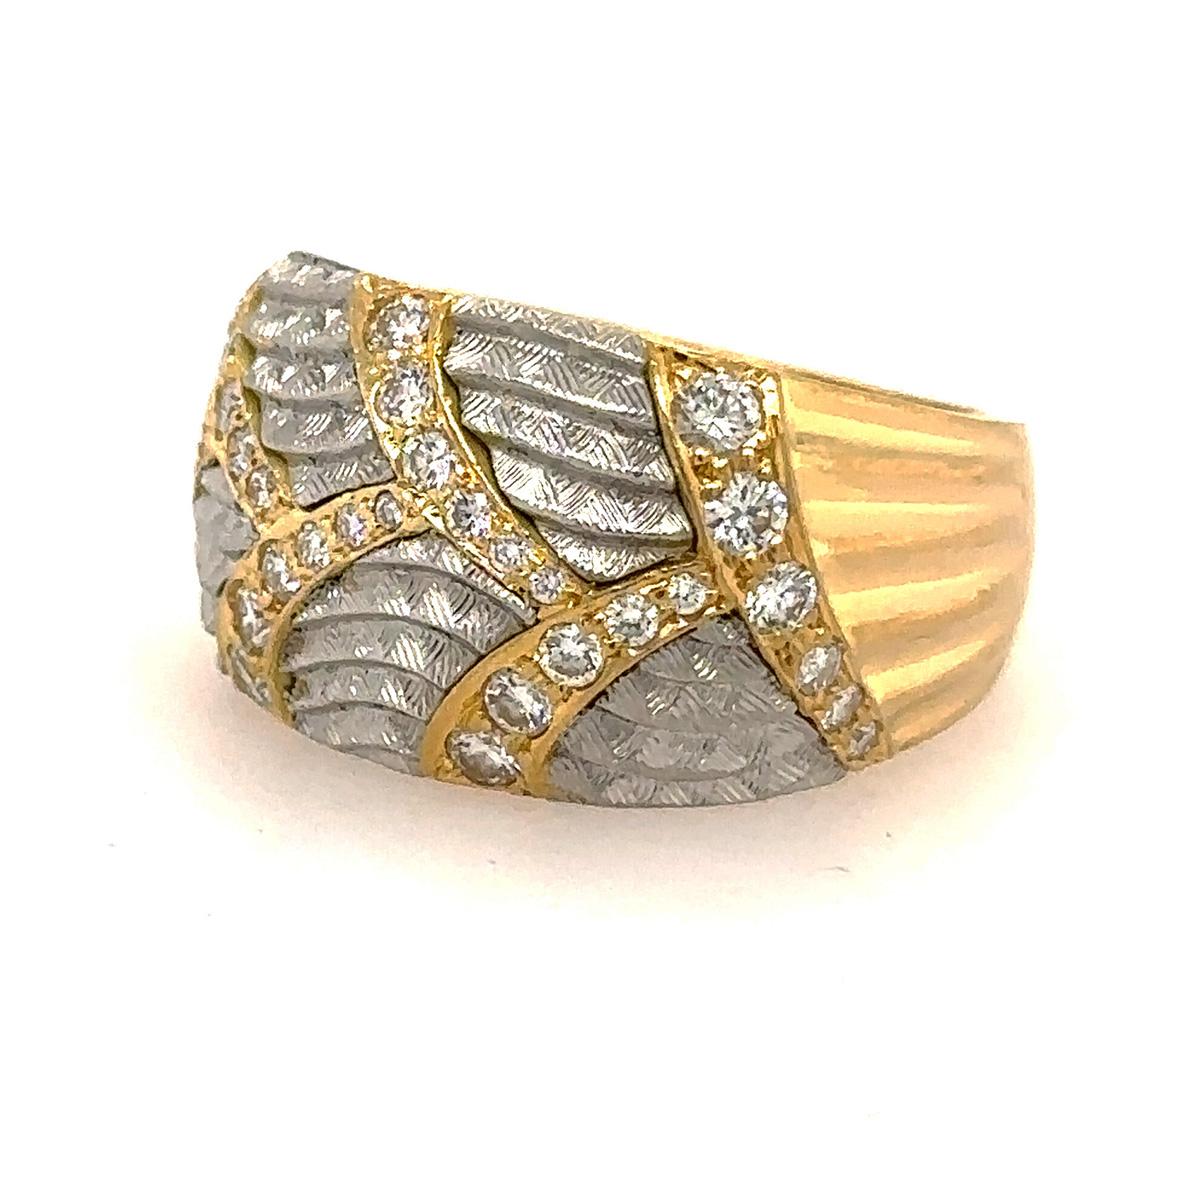 Michael Bondanza 18k & platinum Venti ring with 0.68ctw of EF color VVS clarity round diamonds. 14.25 grams